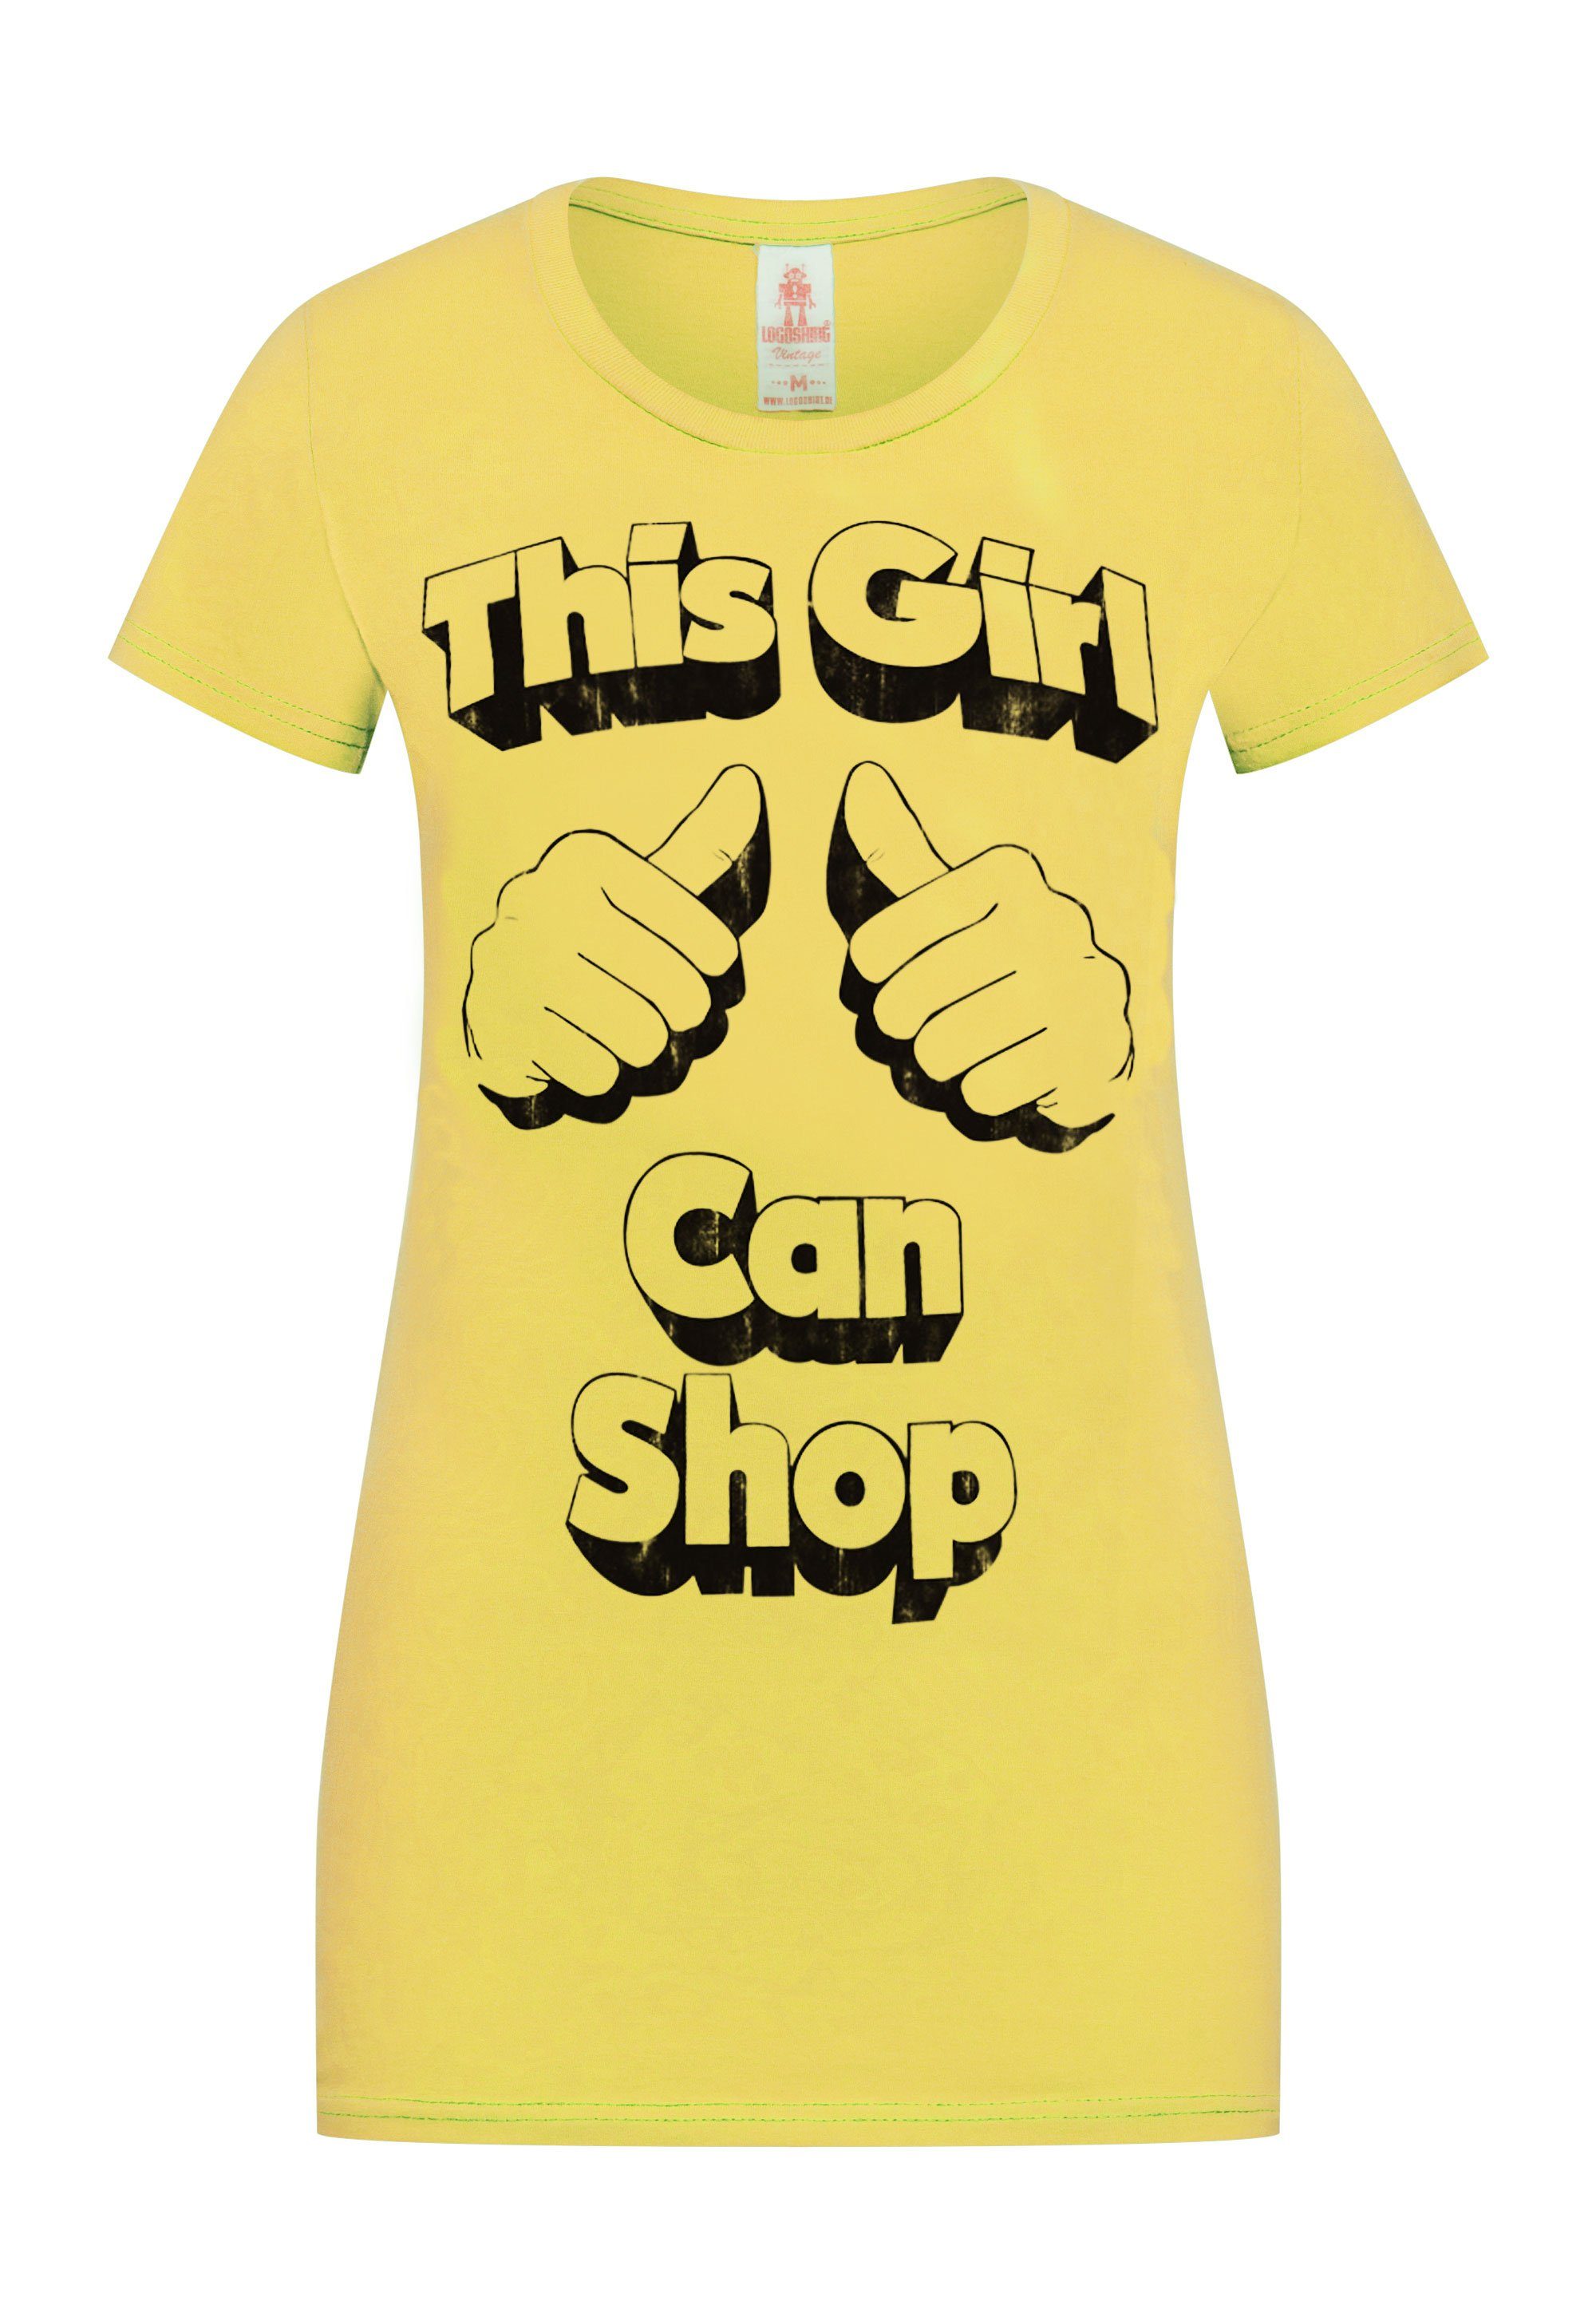 LOGOSHIRT T-Shirt Spruch - This Girl Can Shop mit lizenziertem Print